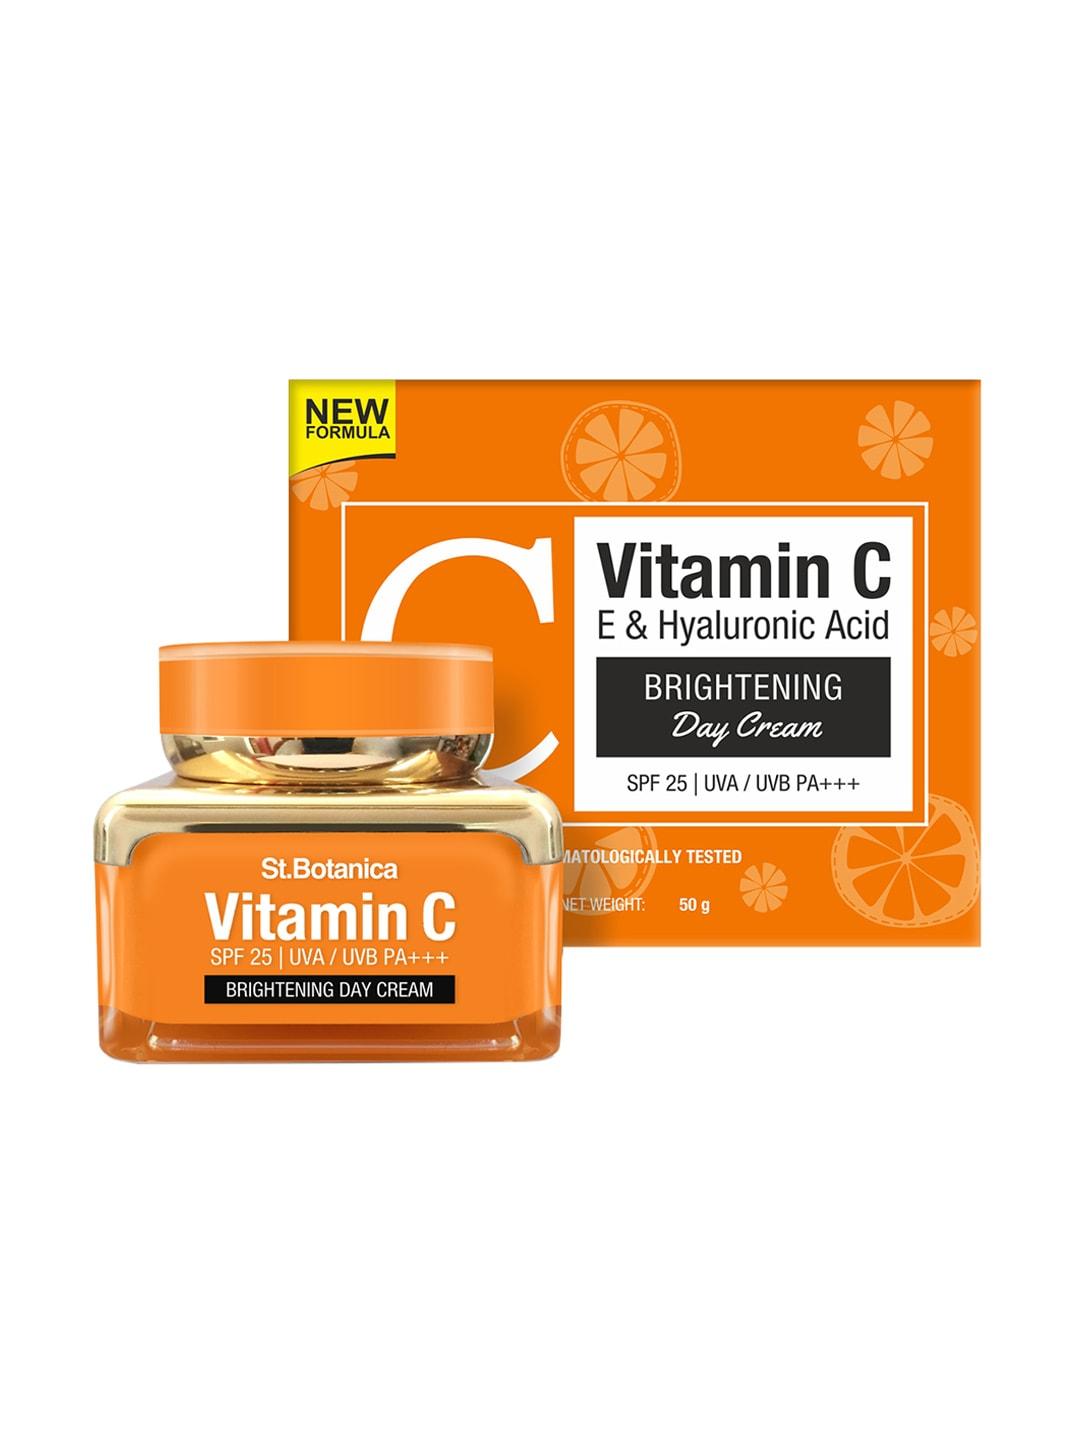 StBotanica Set of 2 Vitamin C Brightening Day Cream With SPF 30 UVA/UVB PA+++